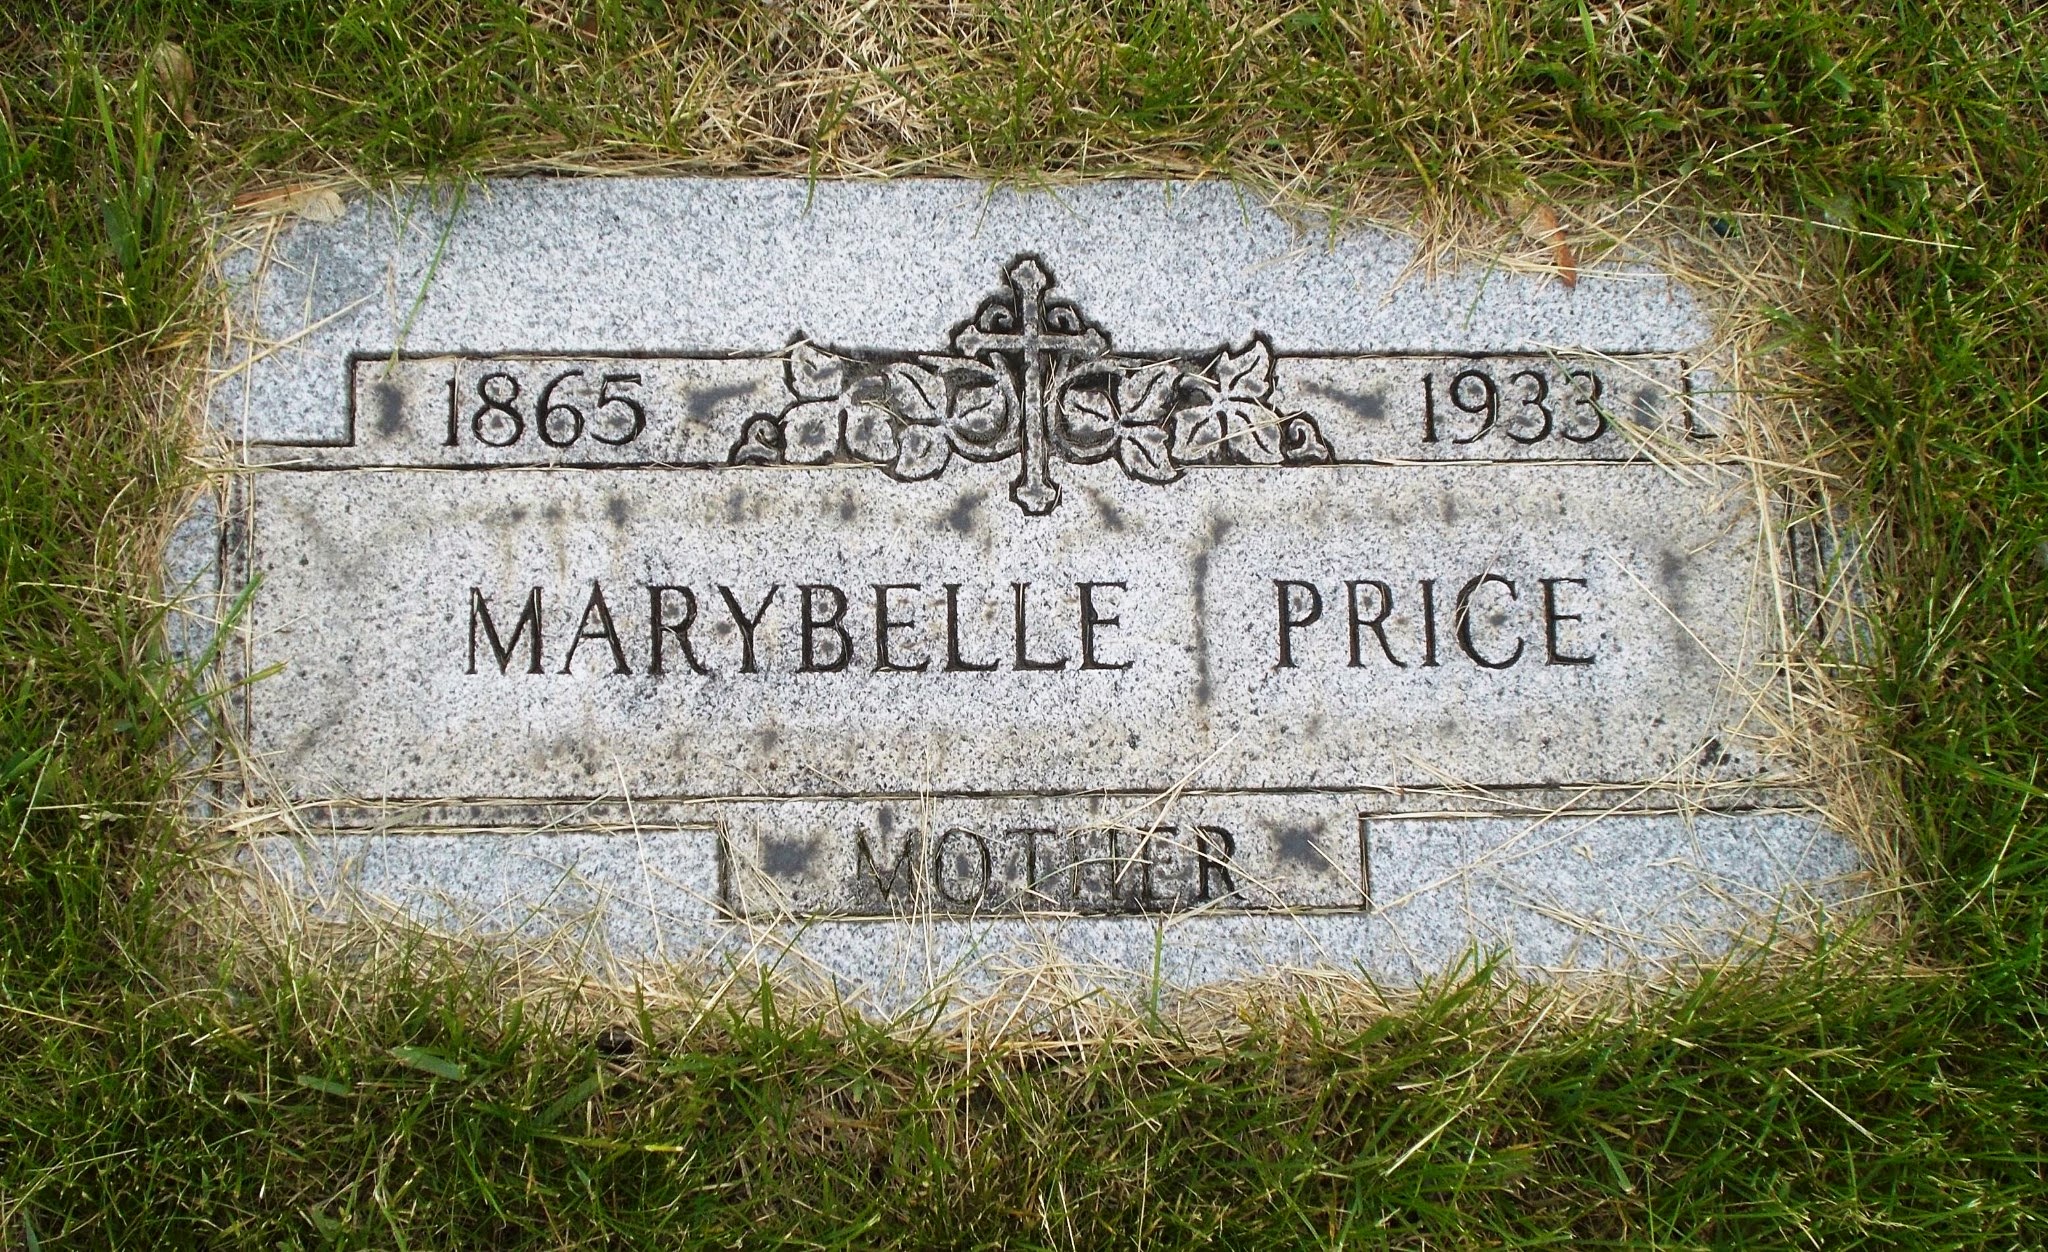 Marybelle Price